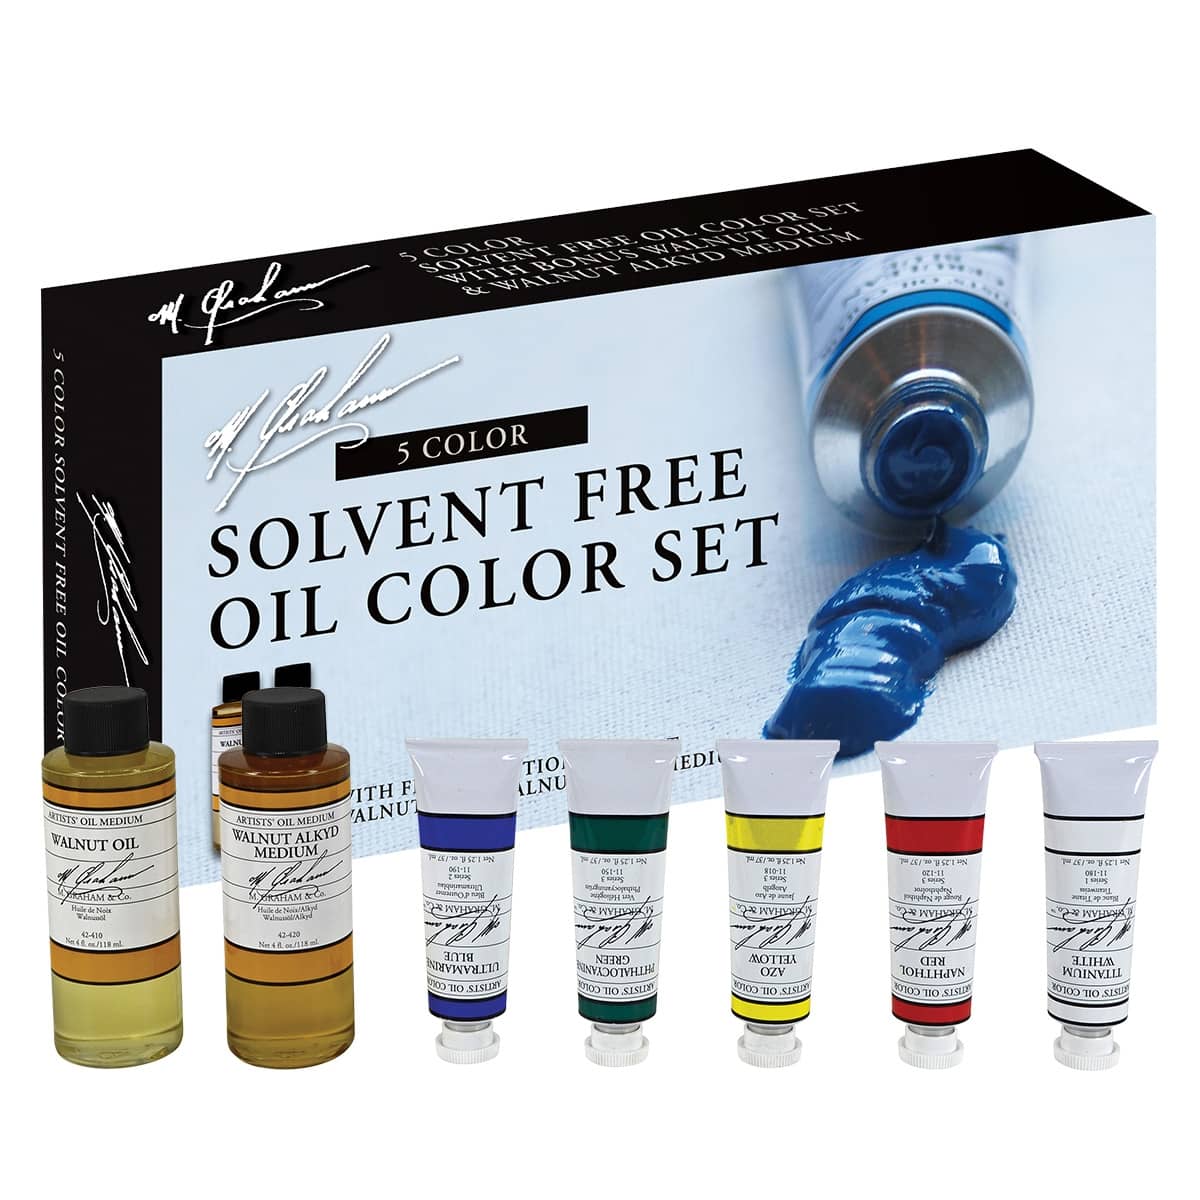 Daler-Rowney Georgian Oil Color Selection Set